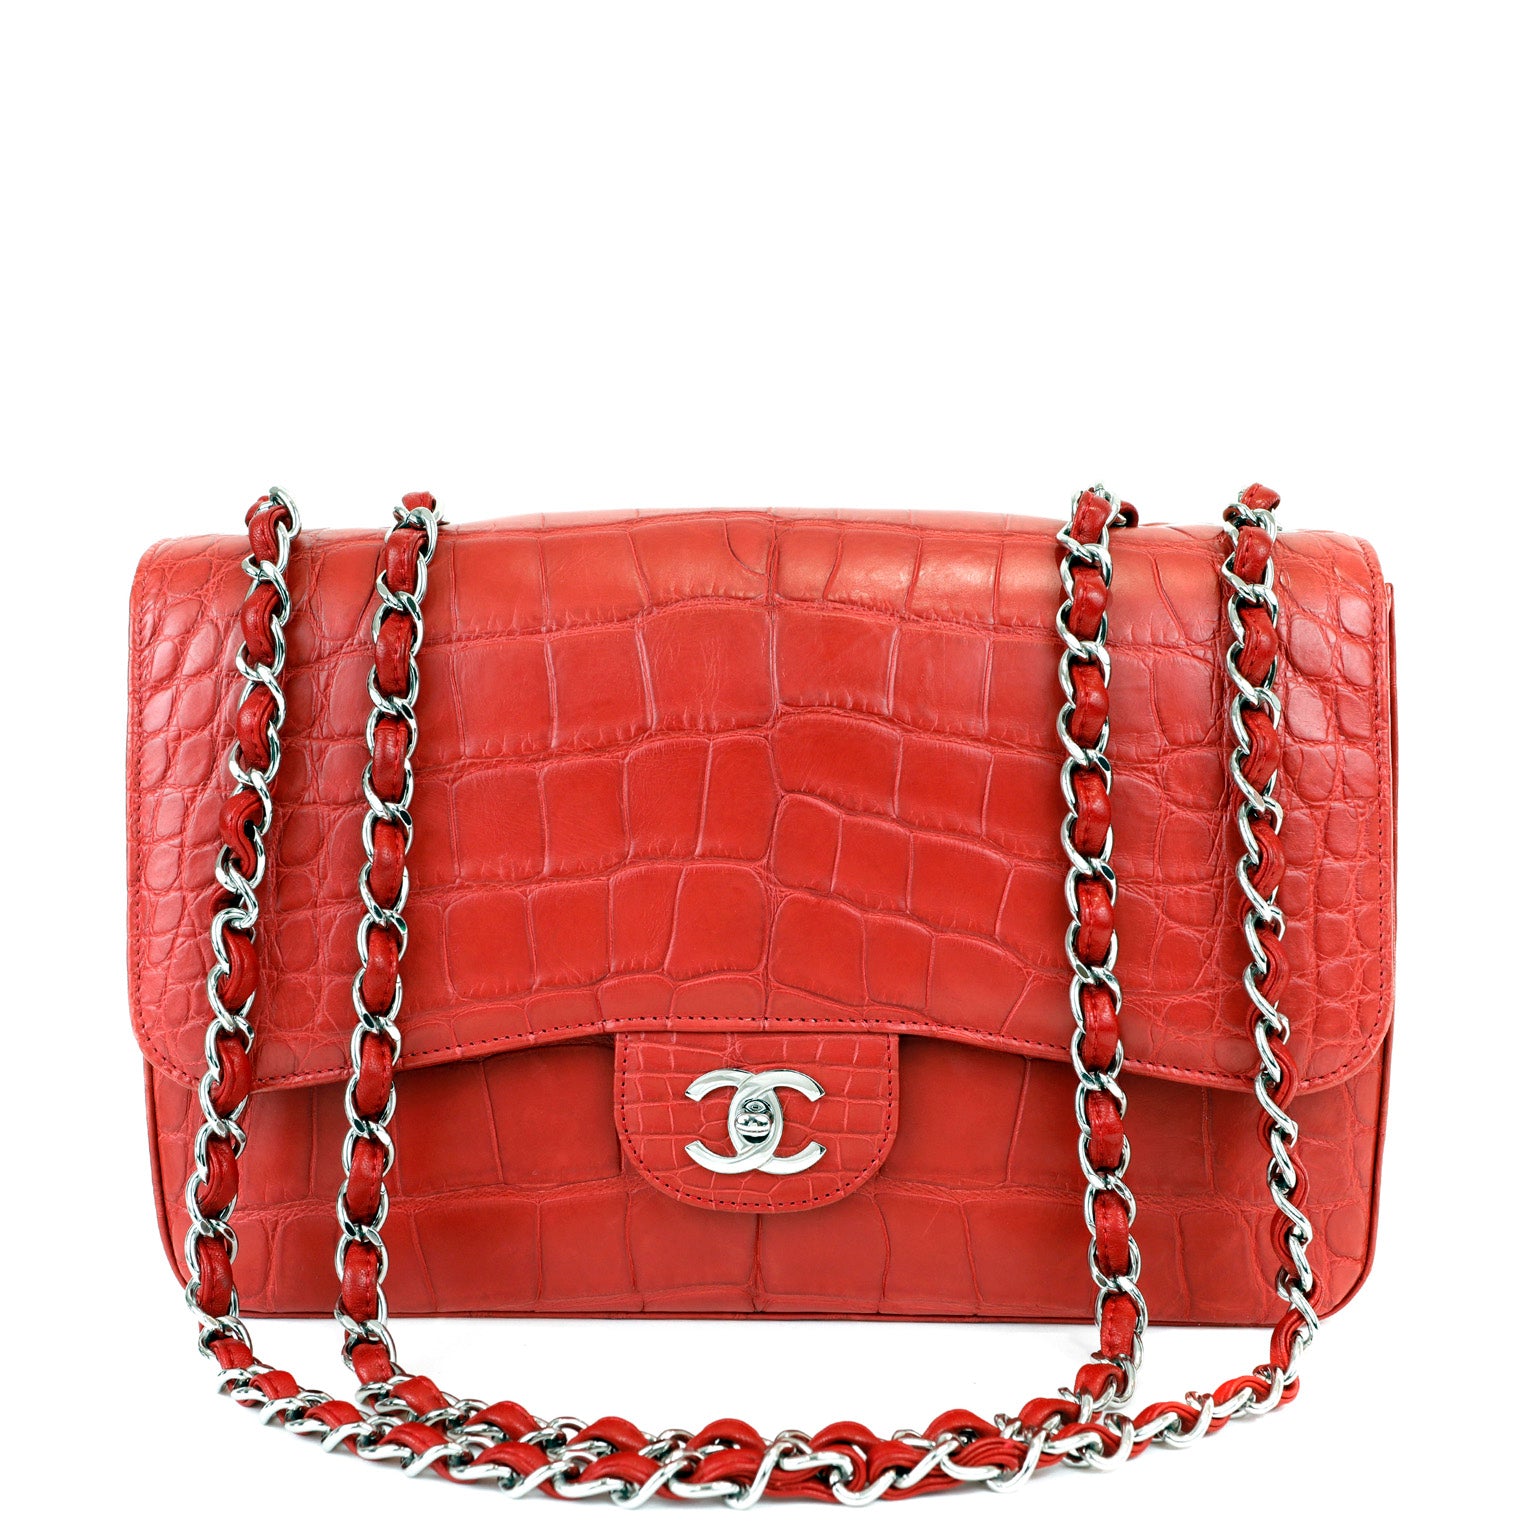 Focus: Handbags at dawn: Chanel duels South Korean resellers in